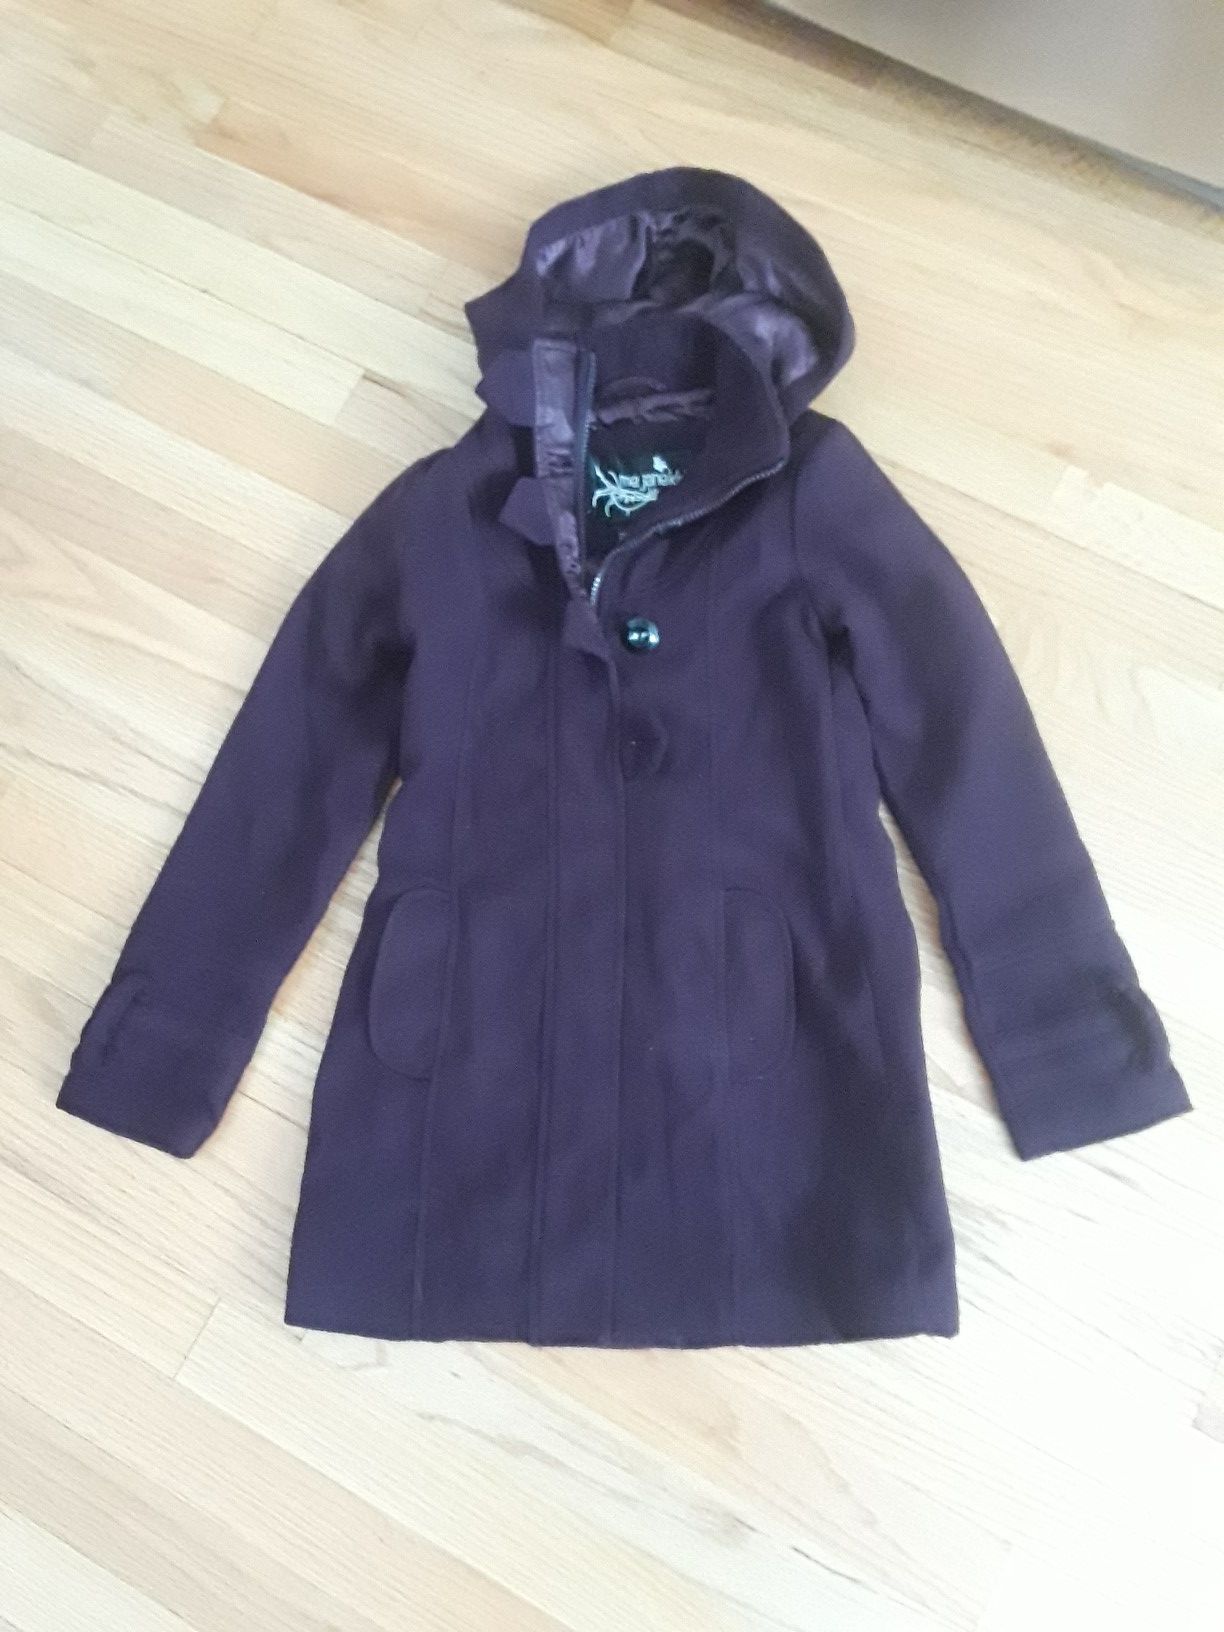 Purple dress coat size 7/8